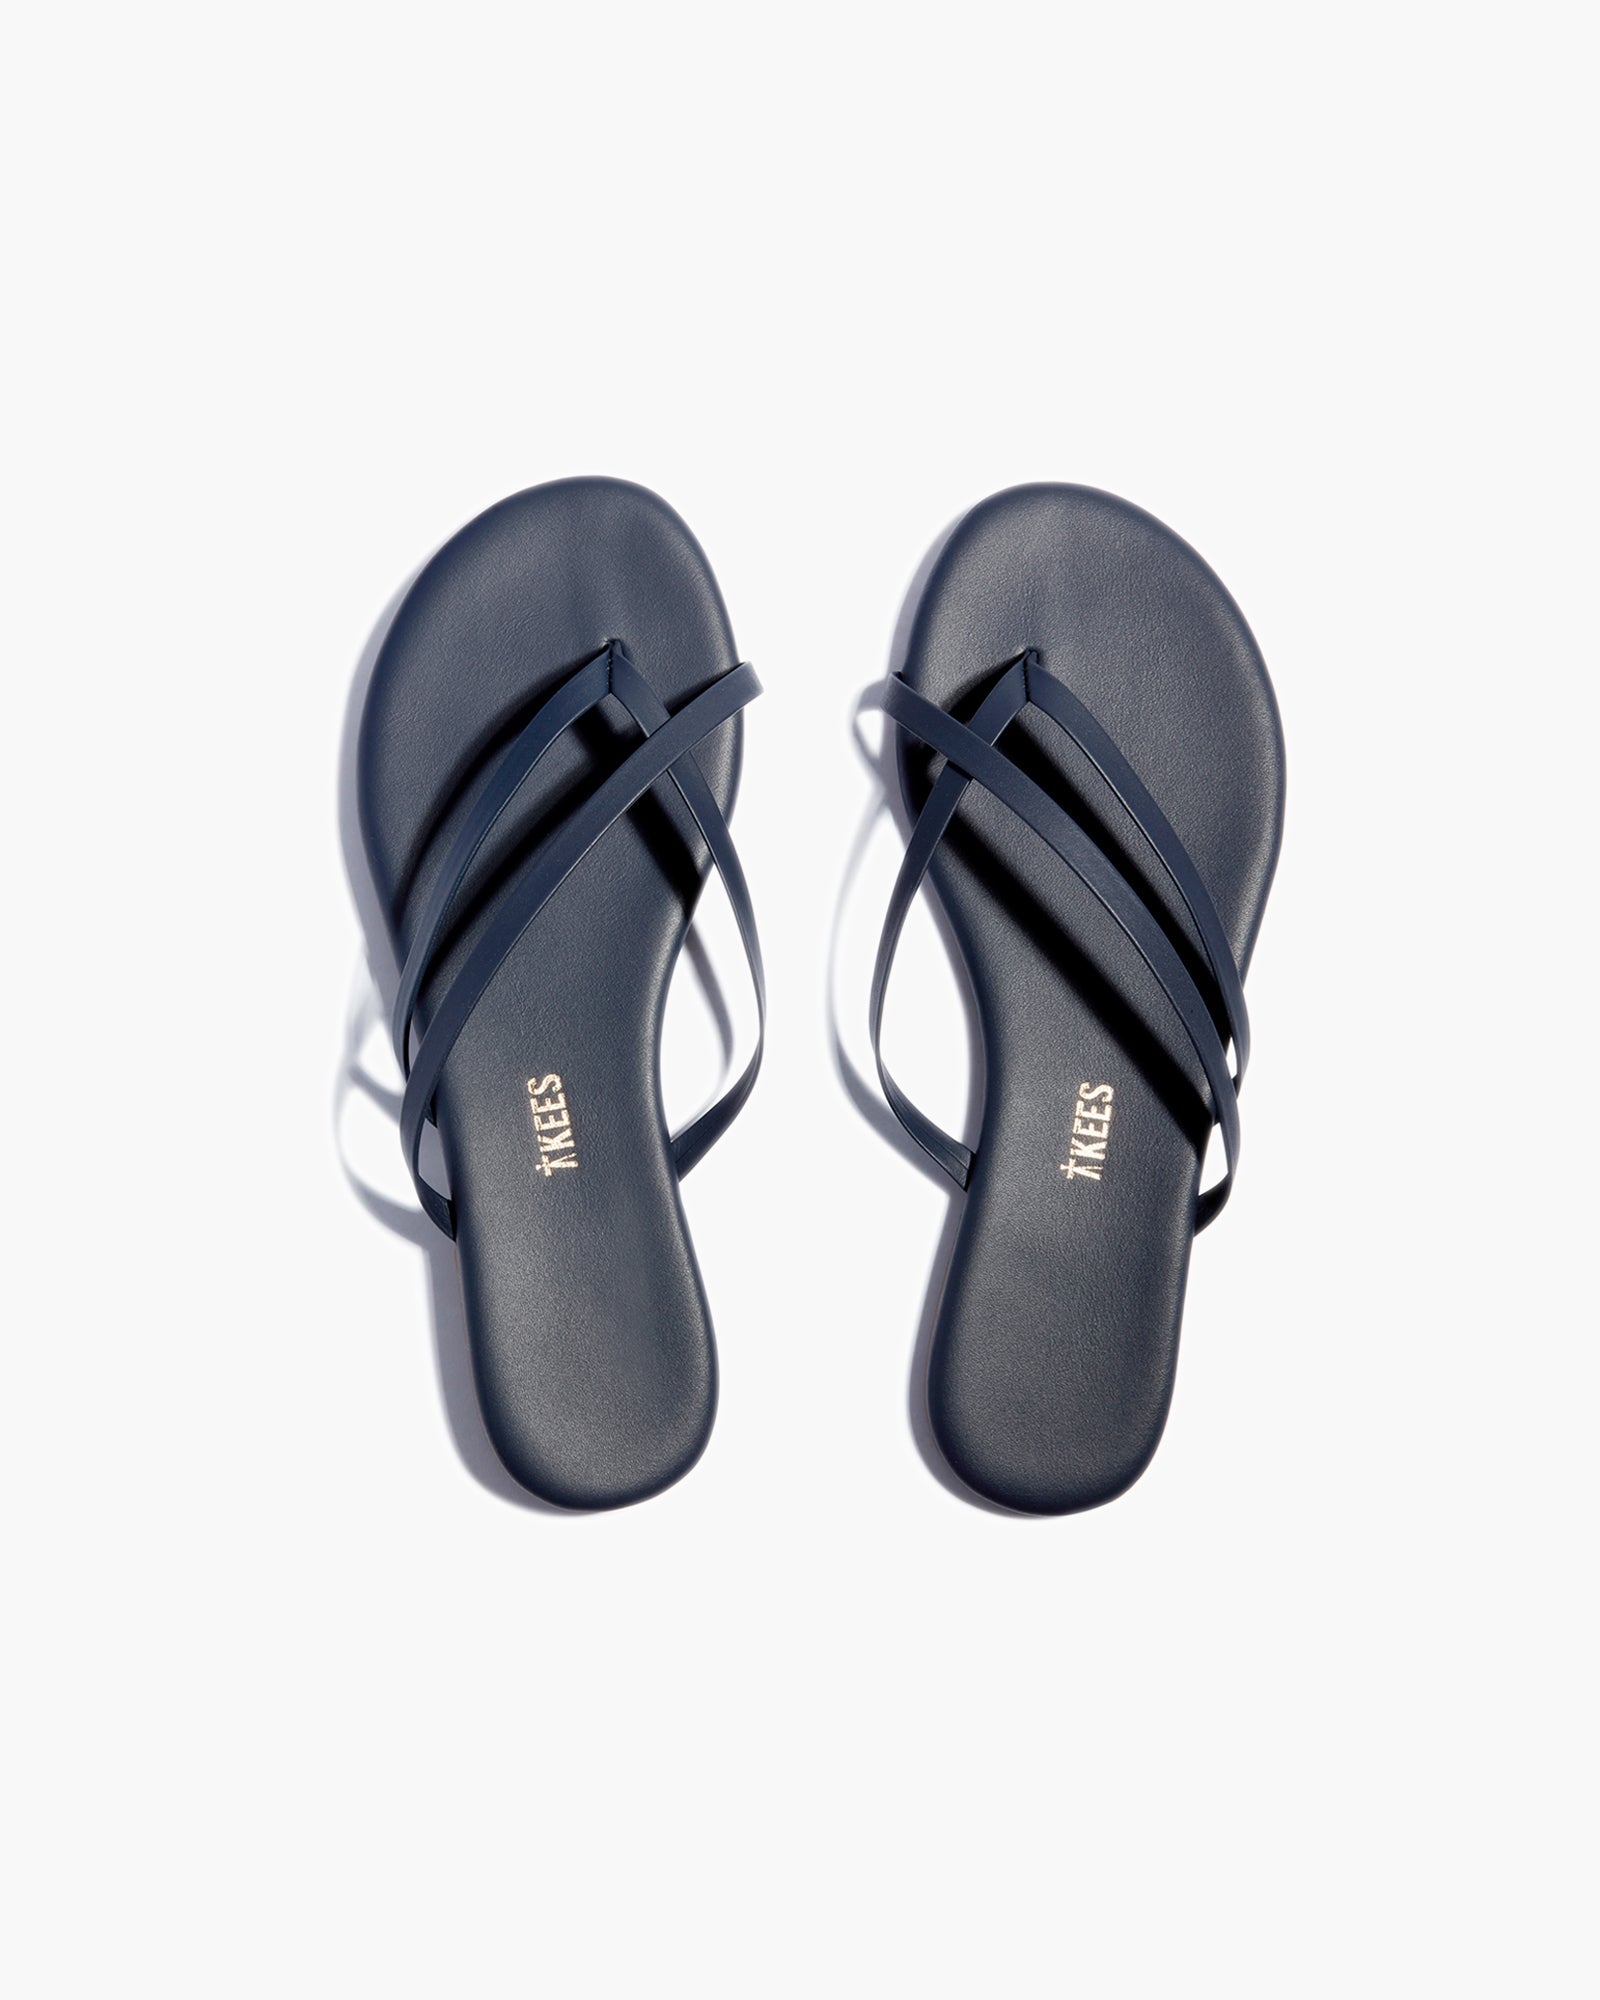 Liri in Iris | Flip-Flops | Women's Footwear – TKEES